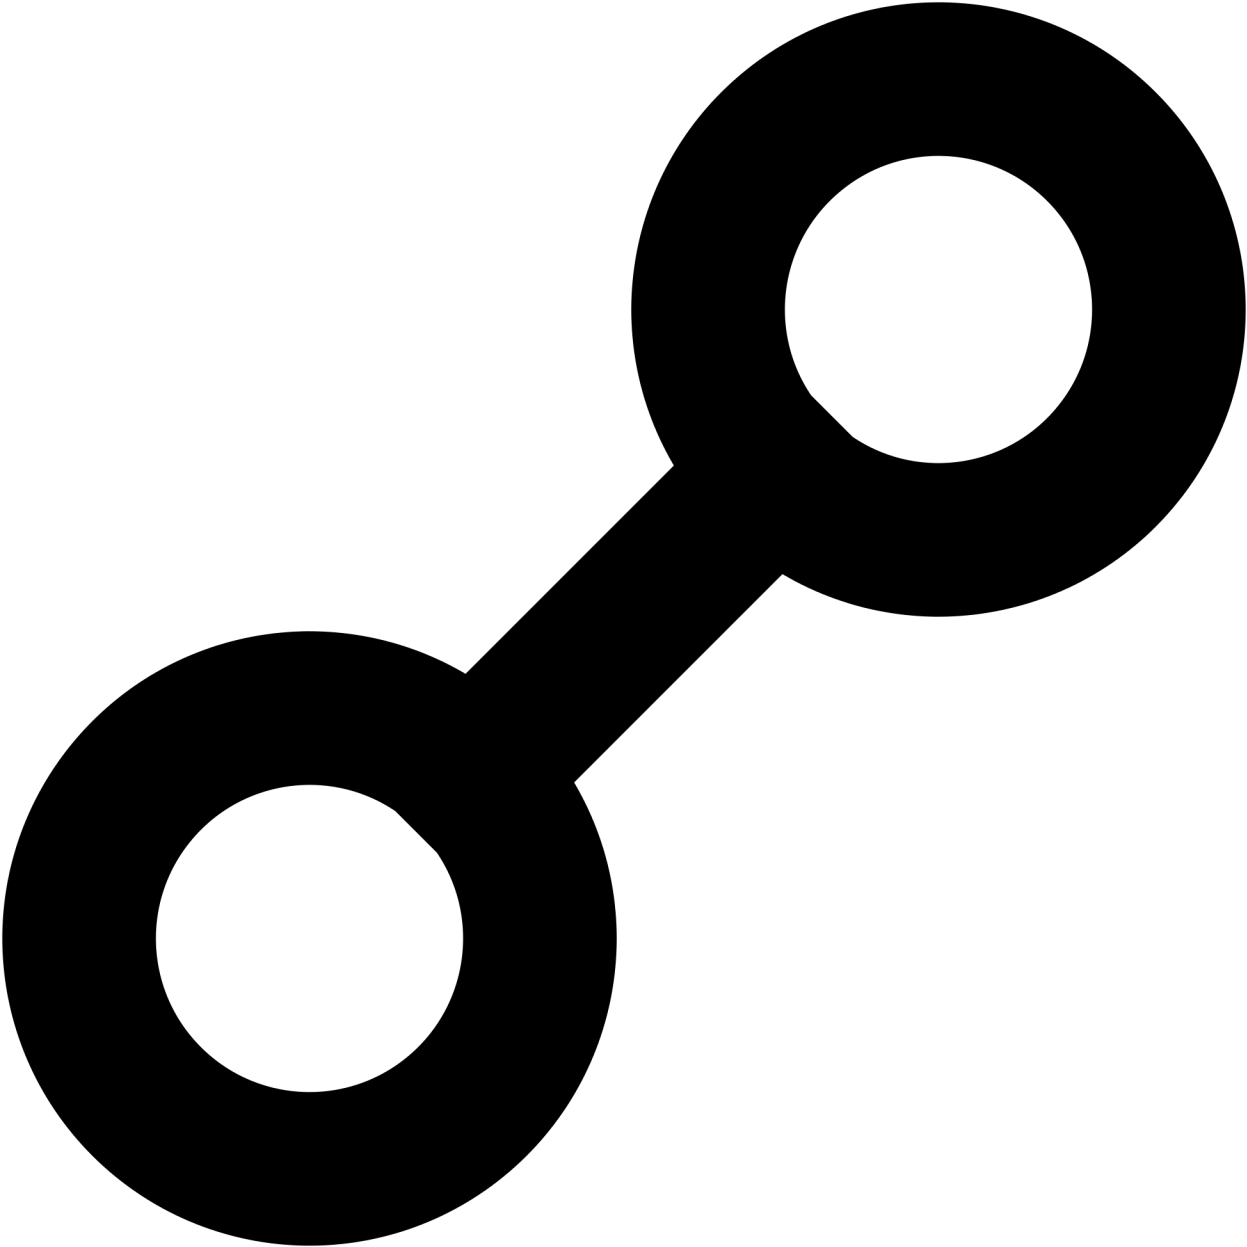 90 Degree Angle Clip Art - Opposition Symbol (1280x1280)